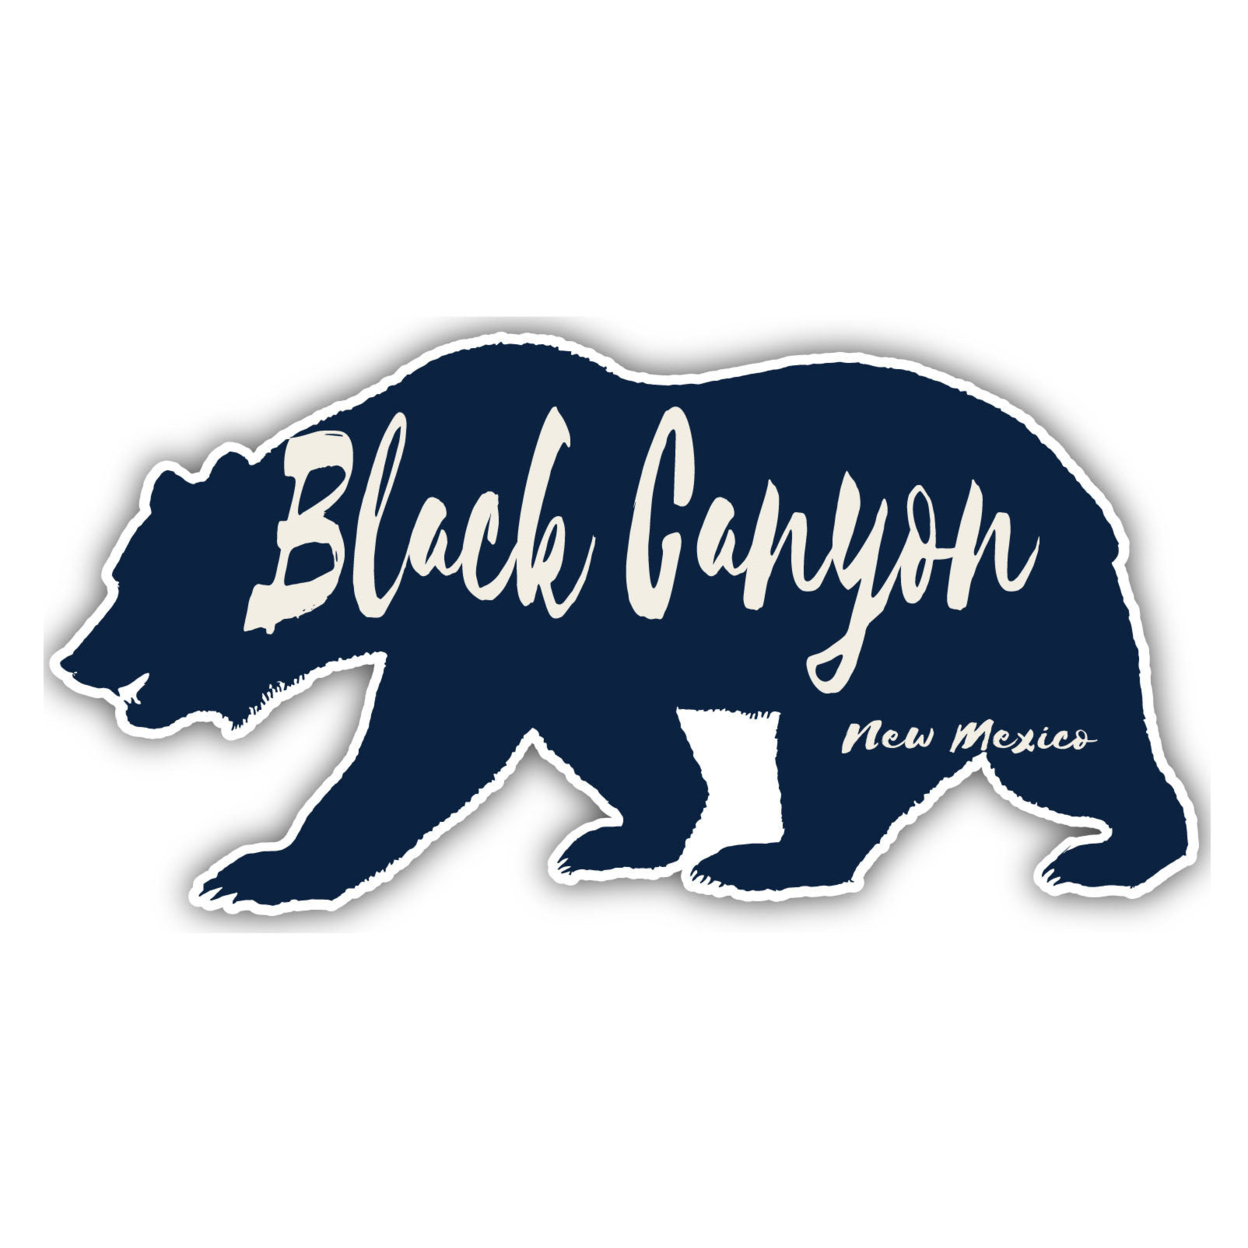 Black Canyon New Mexico Souvenir Decorative Stickers (Choose Theme And Size) - Single Unit, 8-Inch, Bear